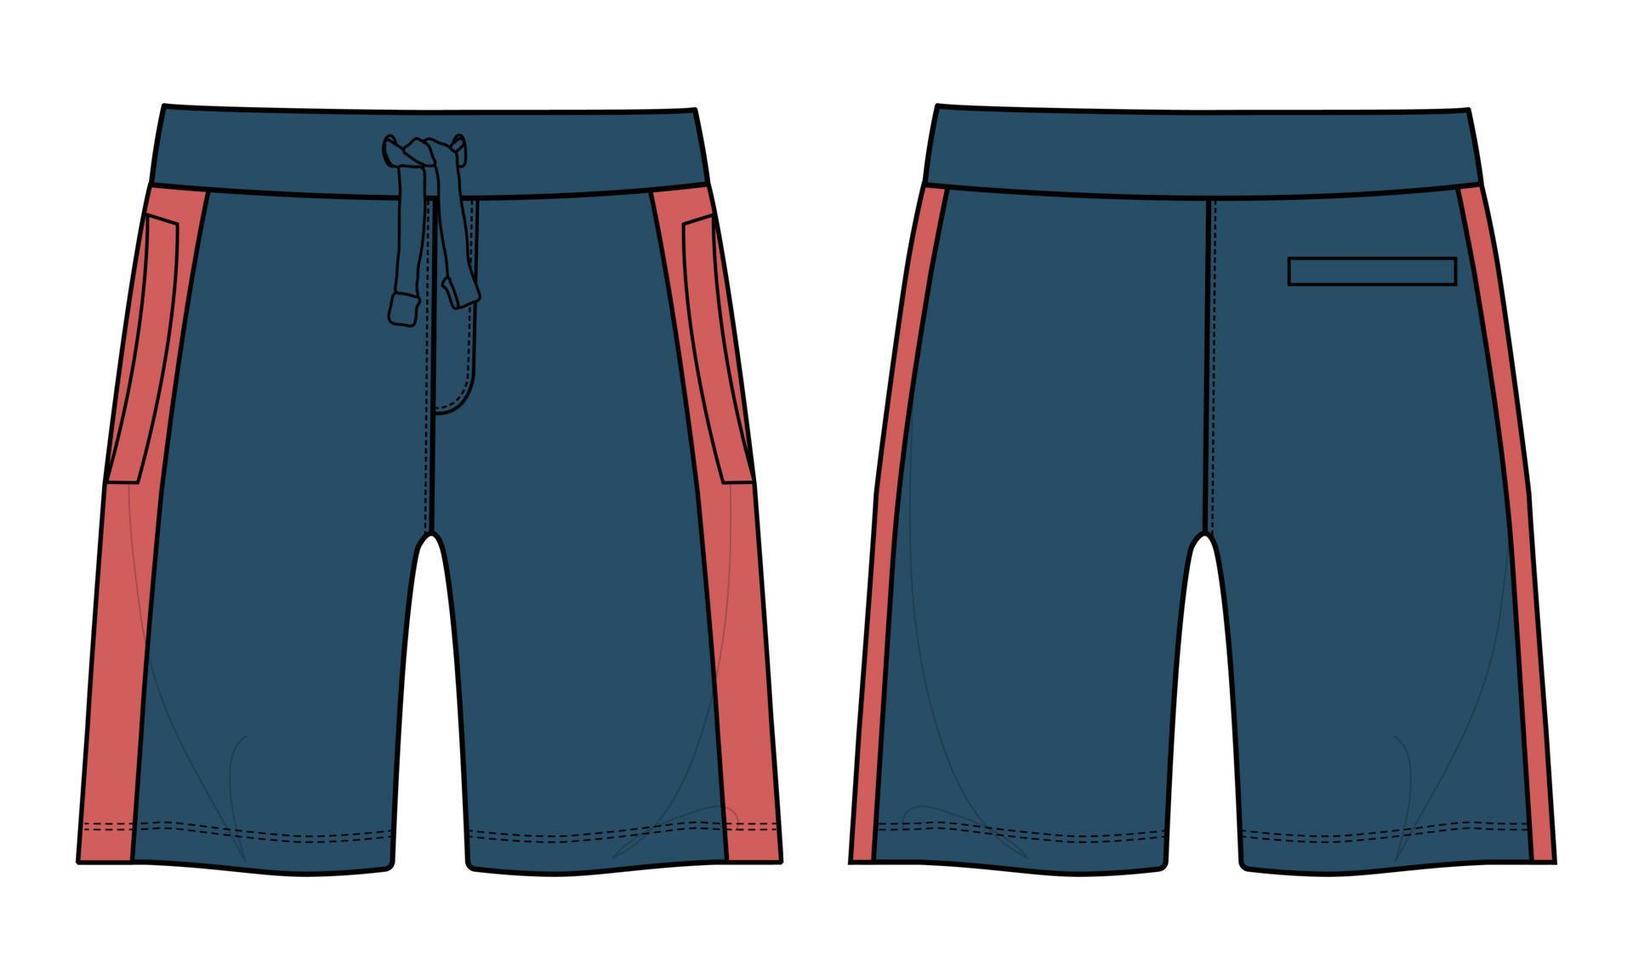 pantalones cortos de chándal para niños moda técnica boceto plano ilustración vectorial plantilla de color azul marino vector